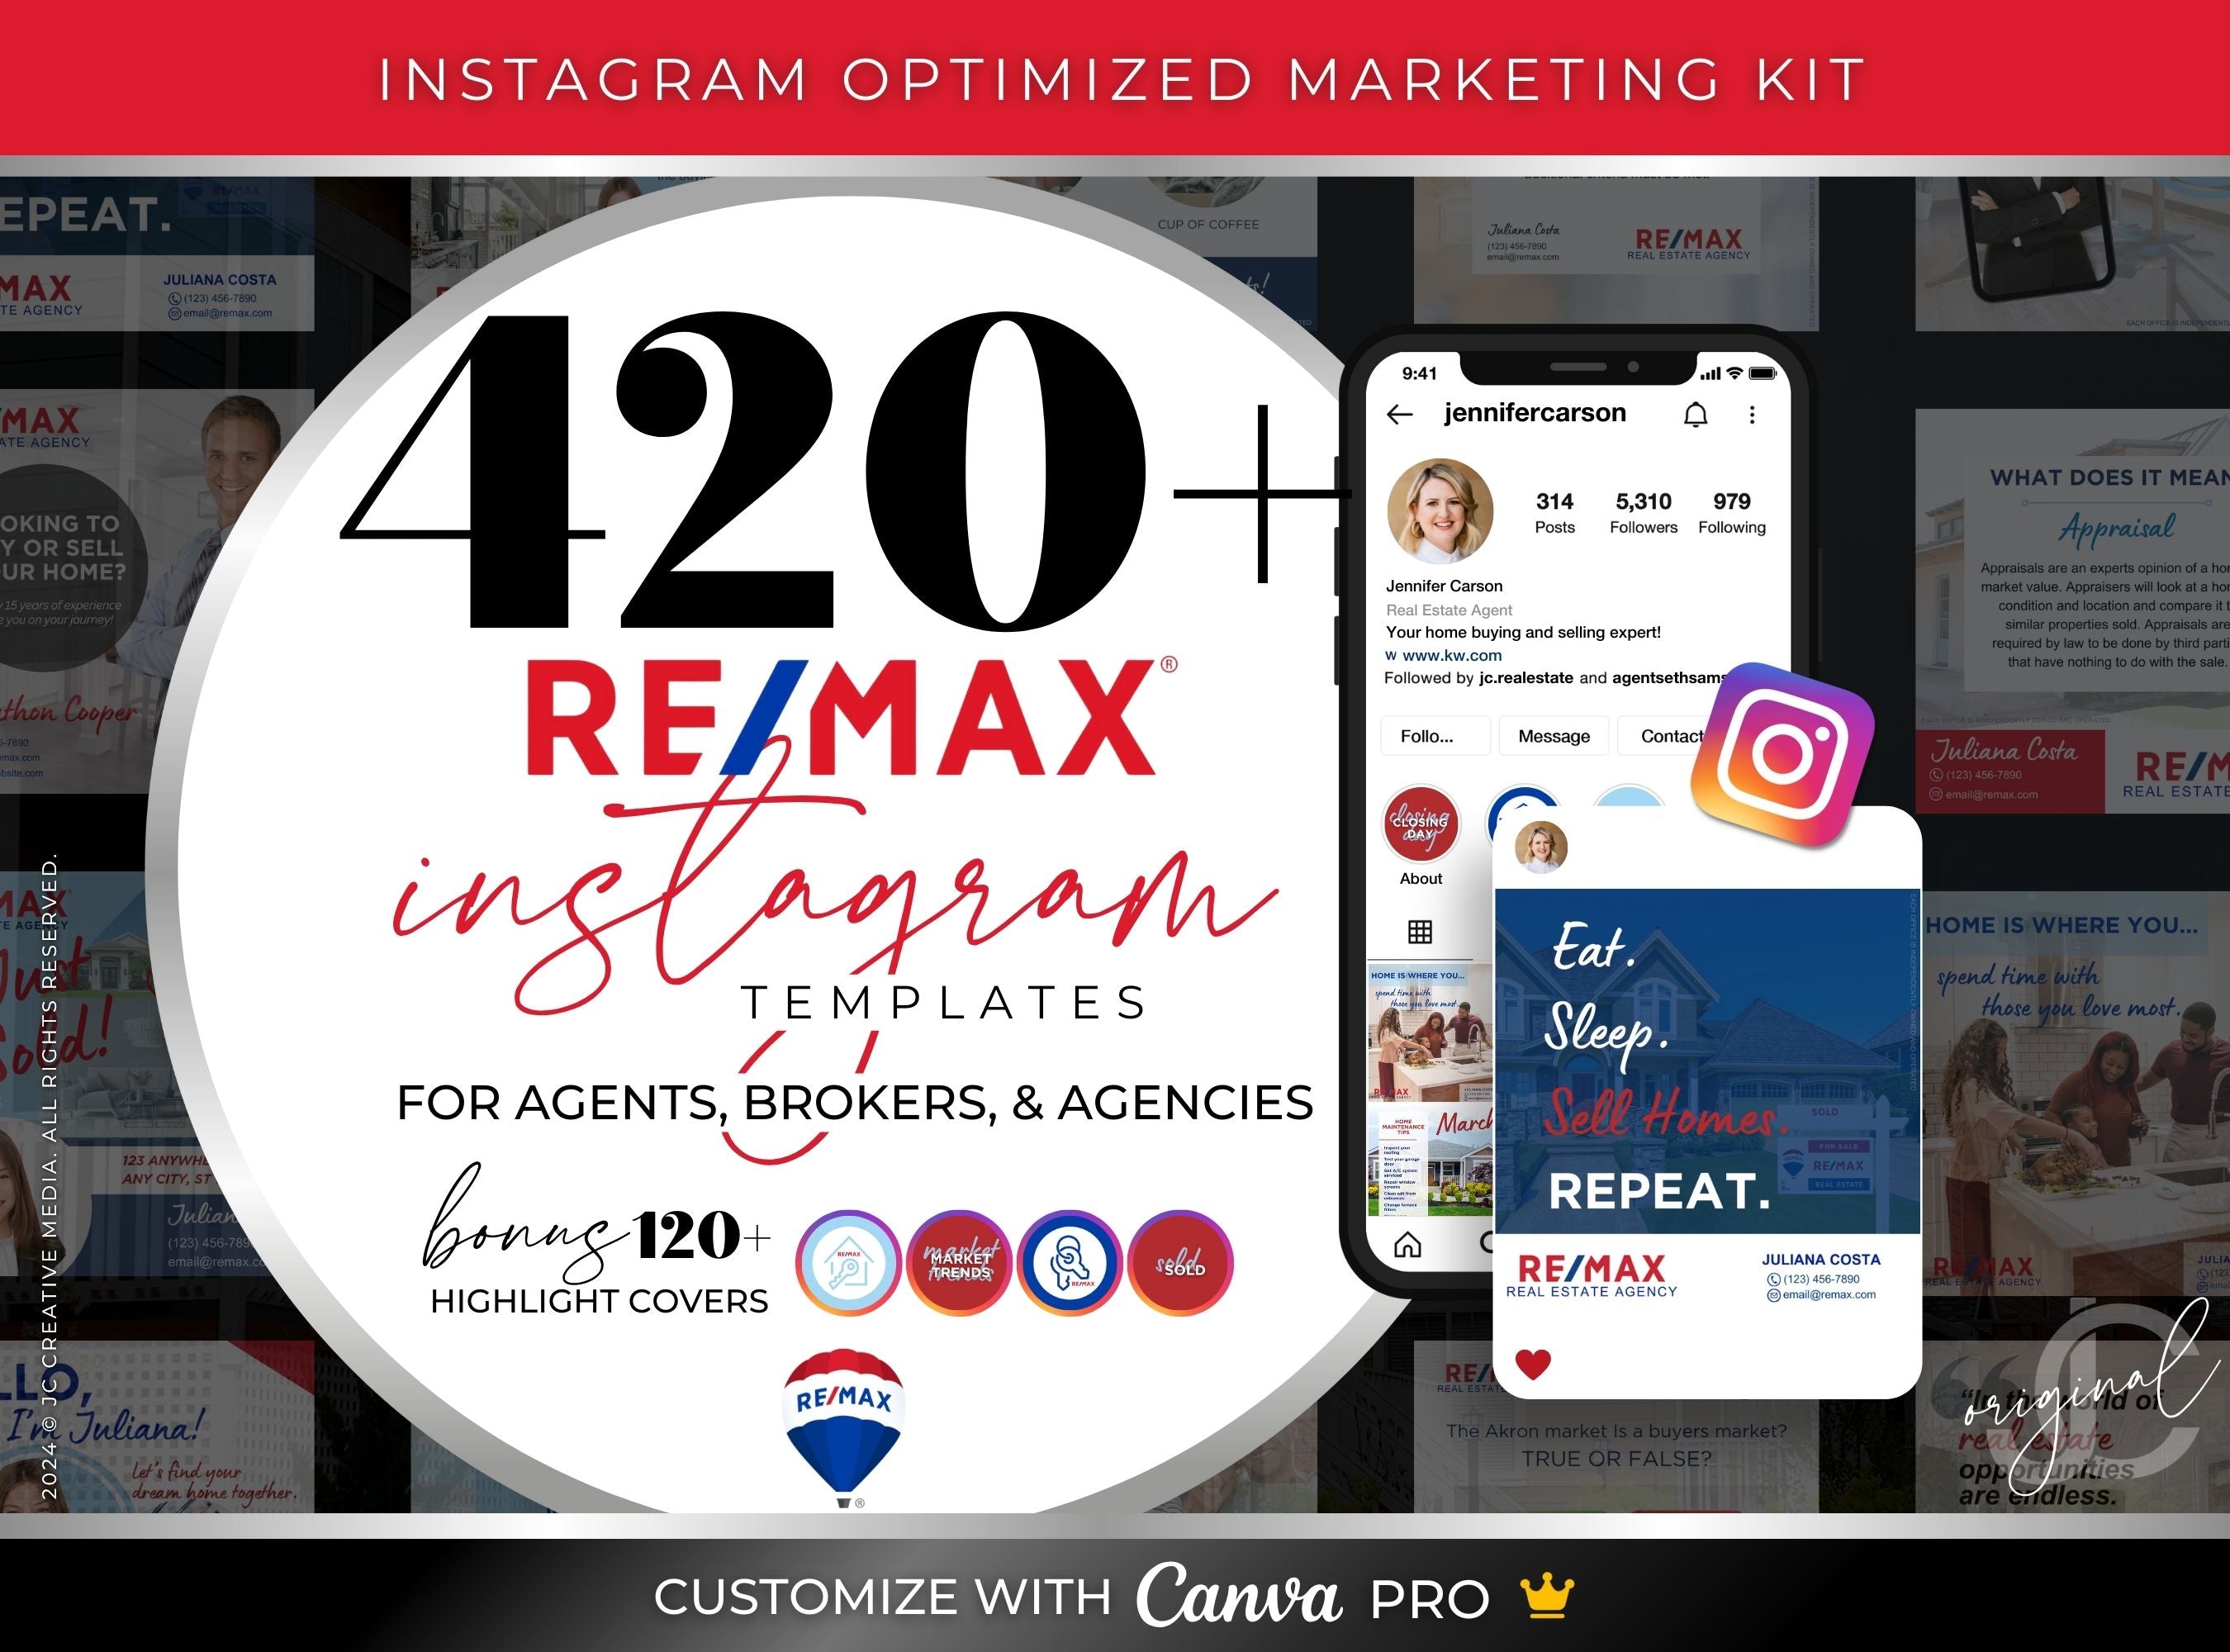 REMAX branded Canva social media templates for real estate agent marketing on Instagram